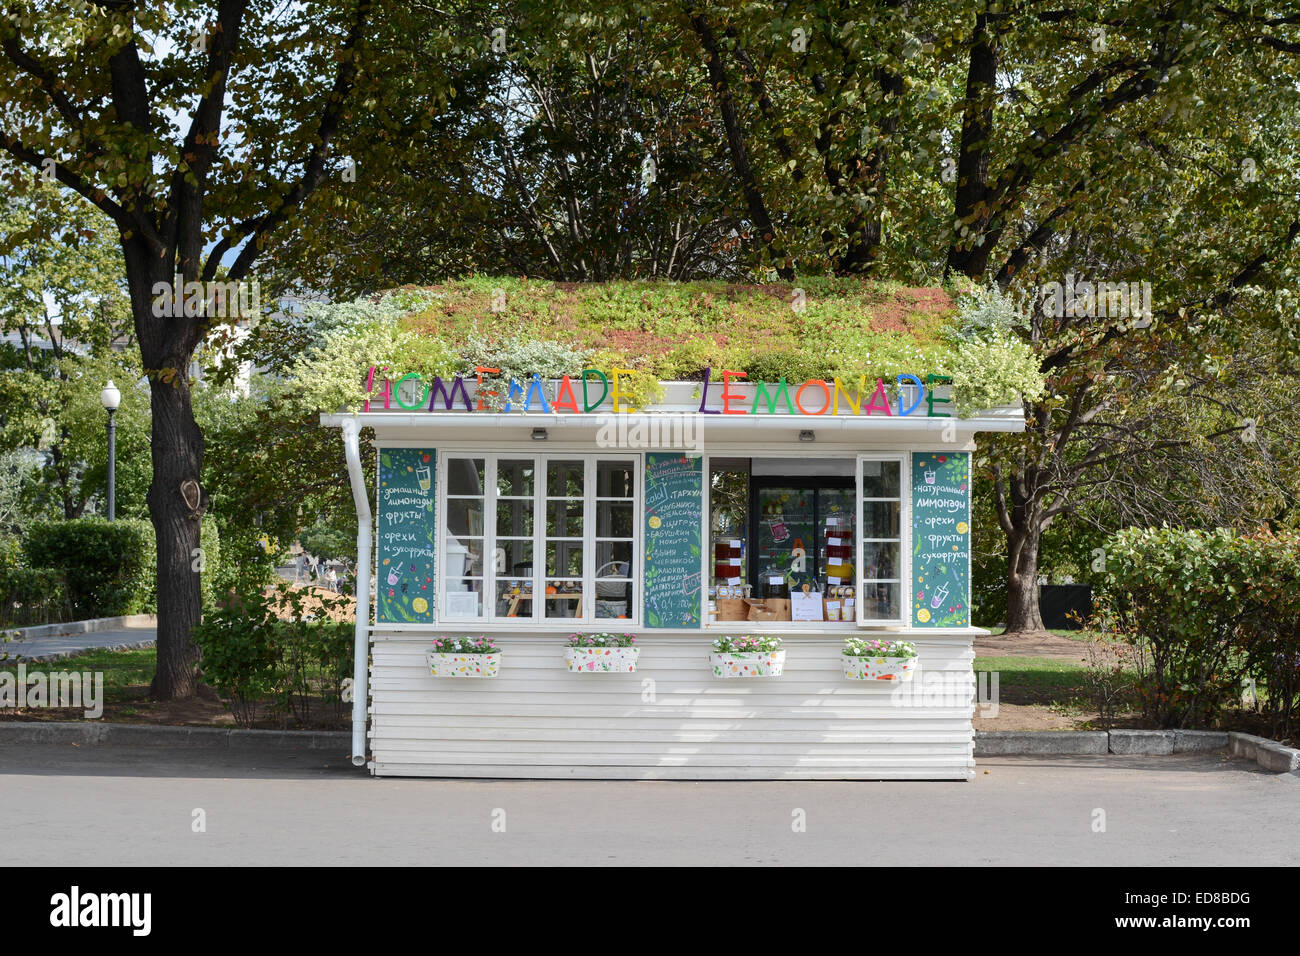 Gorky Park, Moscow - lemonade kiosk with living roof Stock Photo